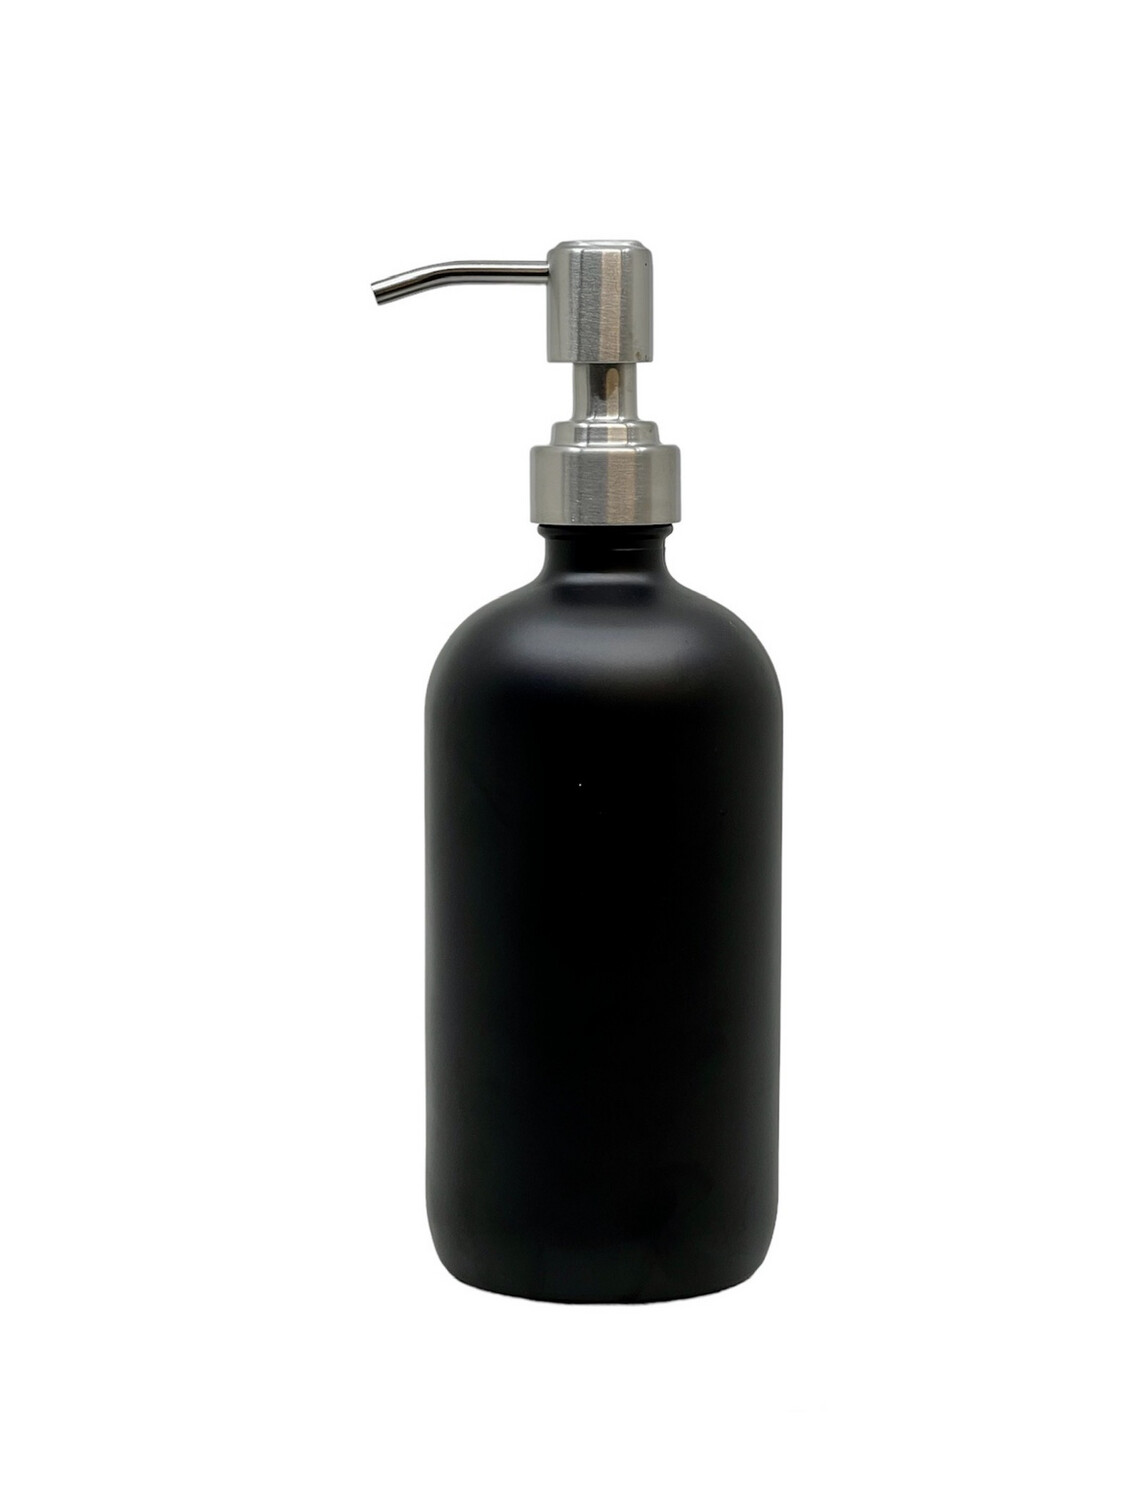 500ml Glass Bottle With Metal Zen Pump Cap - Frosted Black Bottle